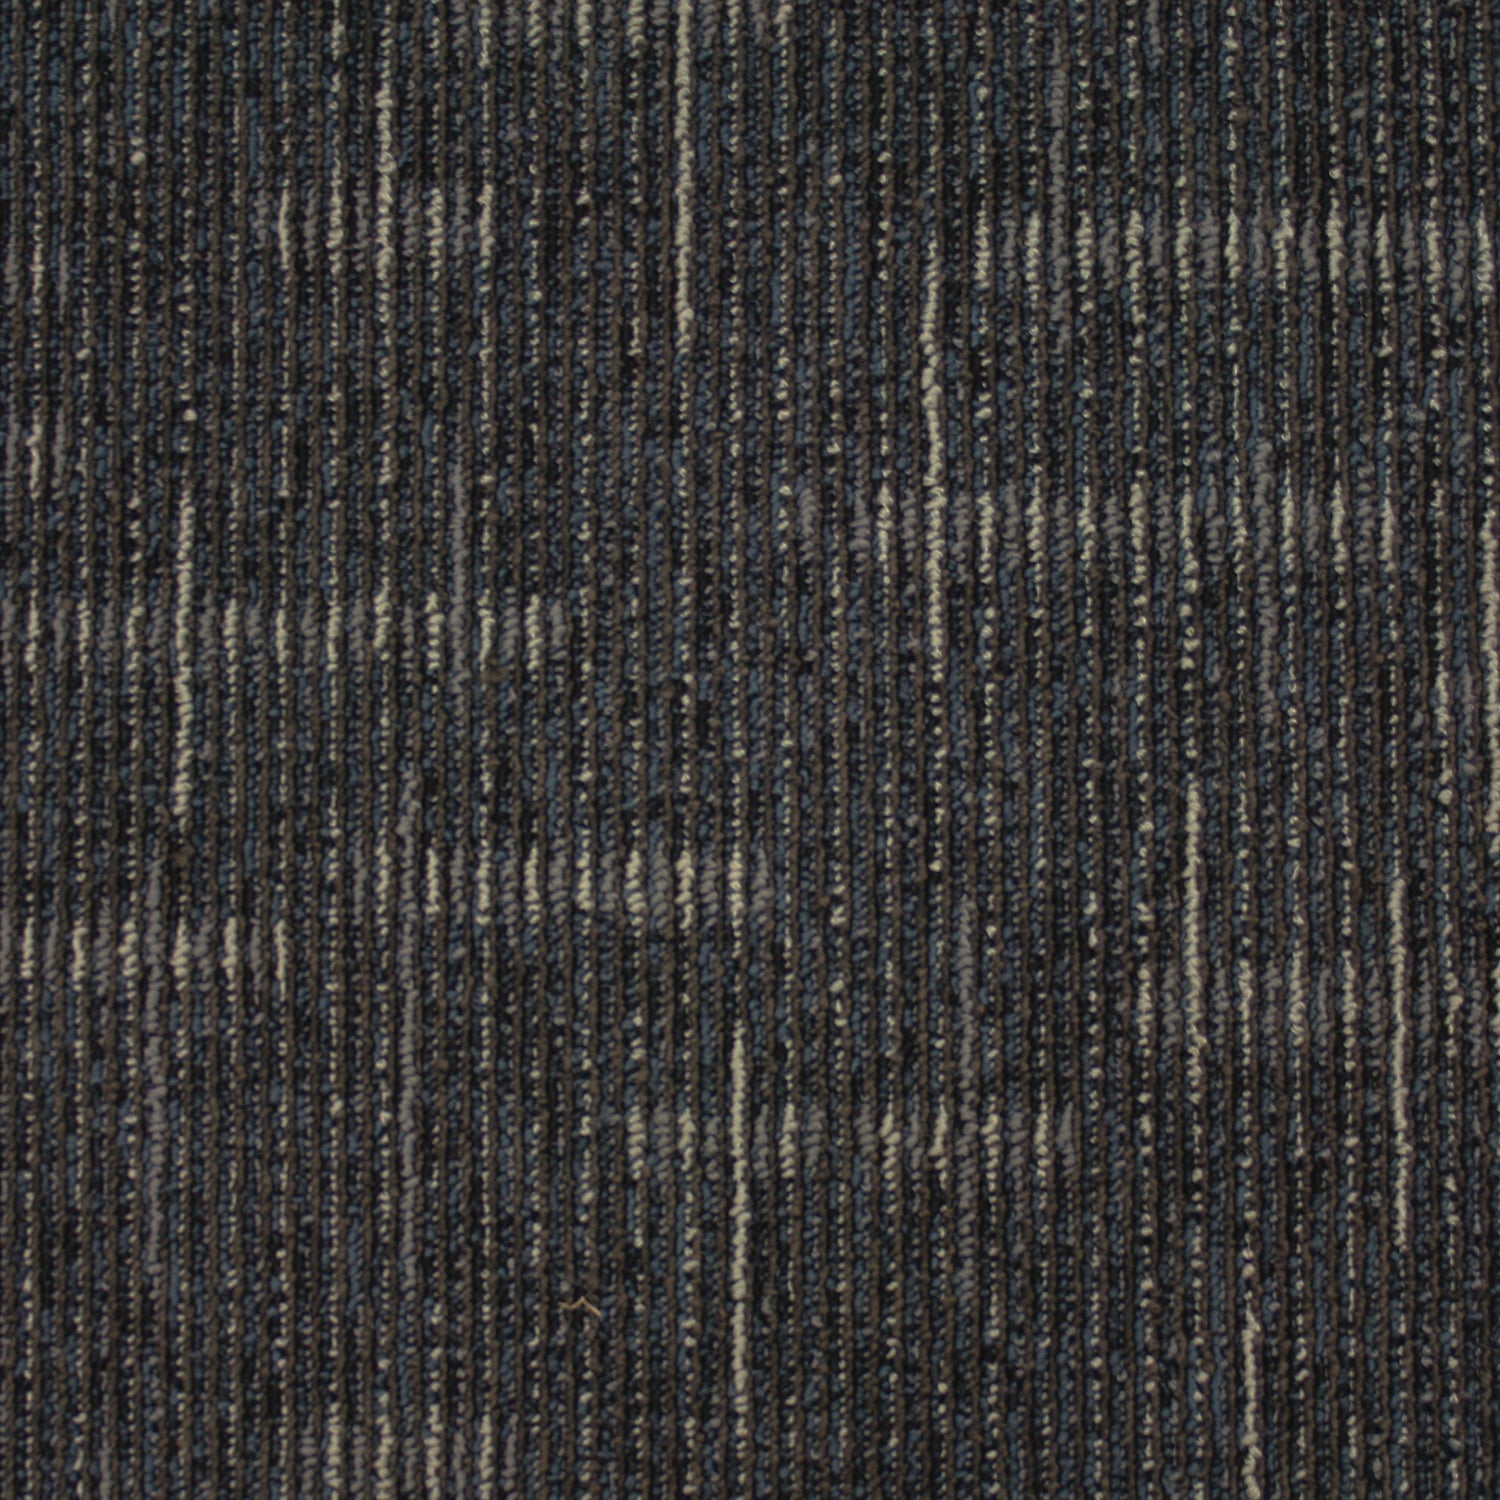 Kraus Carpet Tile Perspective Attribute 724003